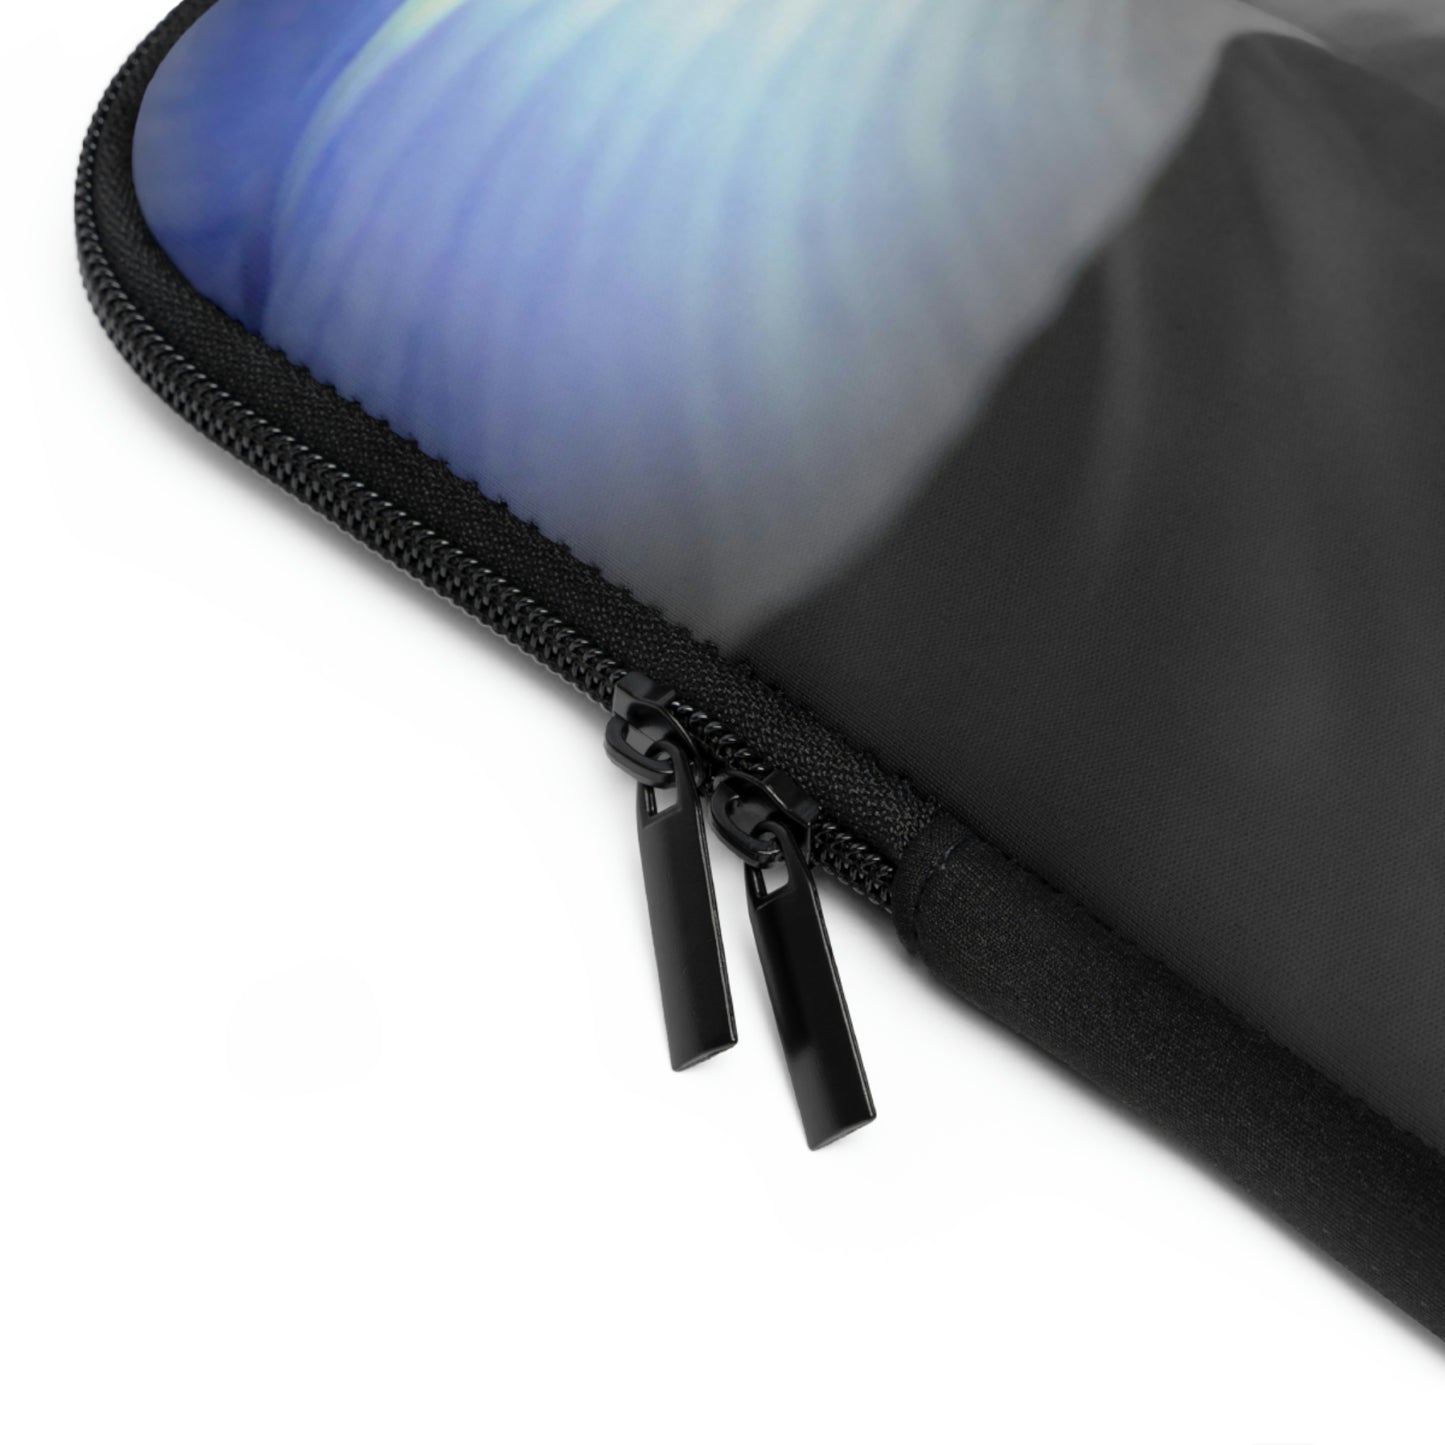 Black and White Iris Laptop Sleeve